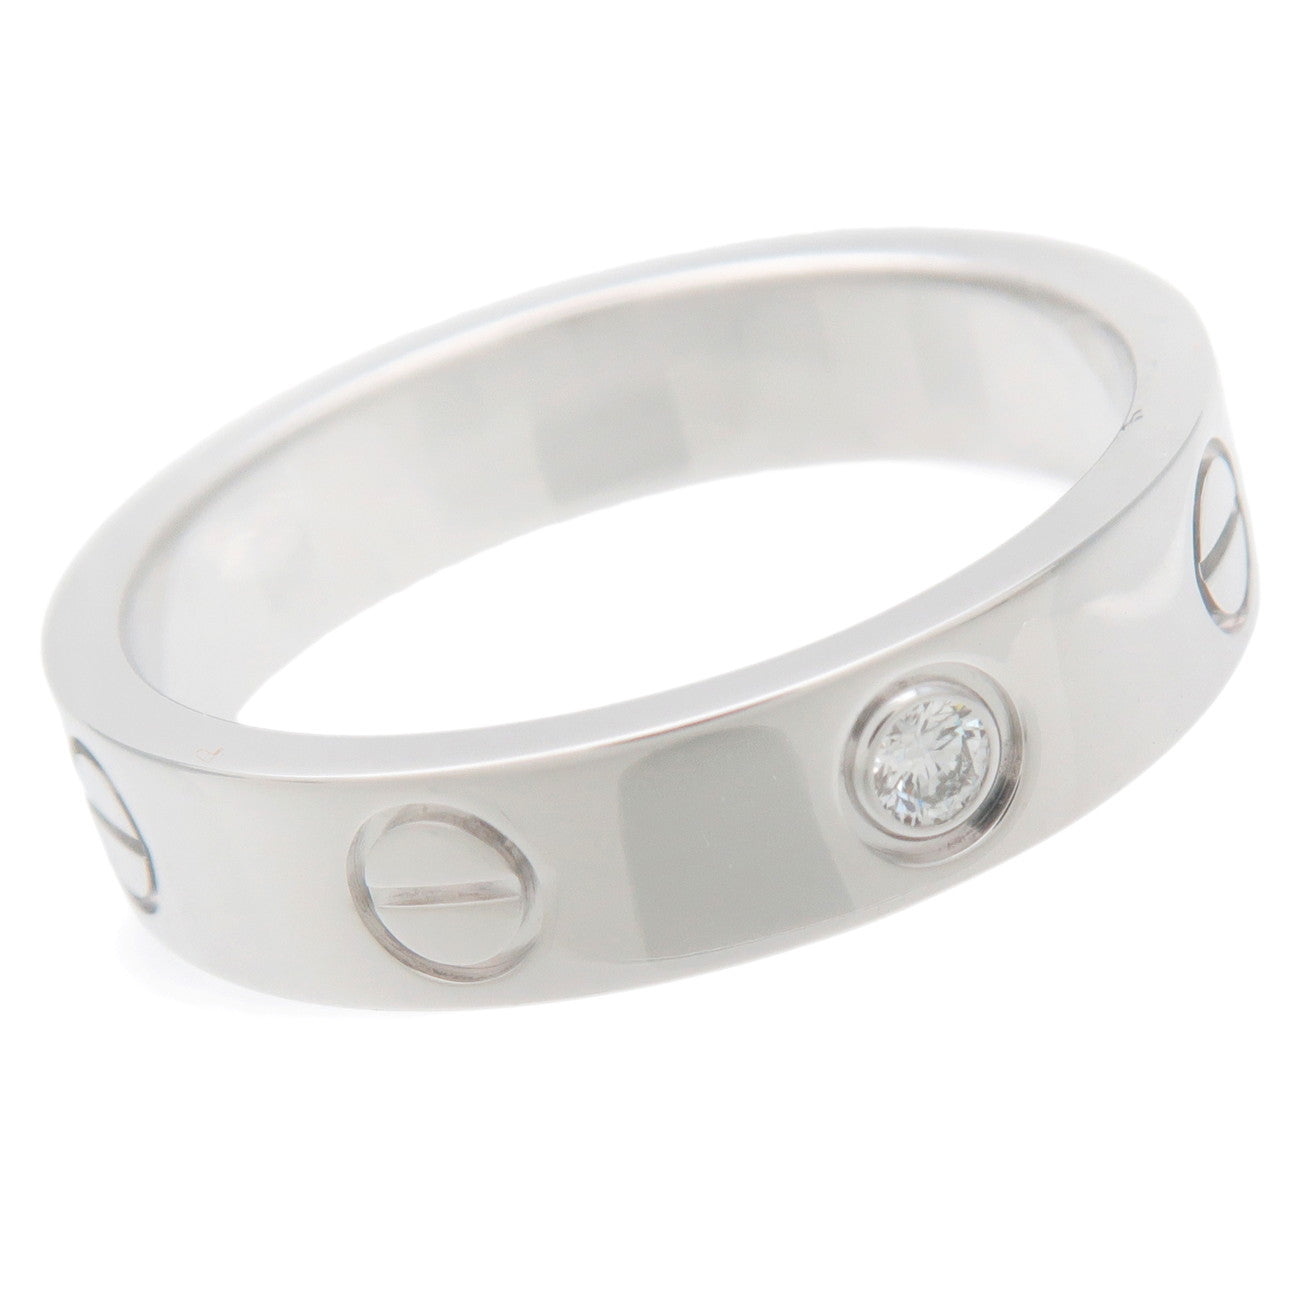 Cartier Mini Love Ring 1P Diamond K18 750WG White Gold #49 US5